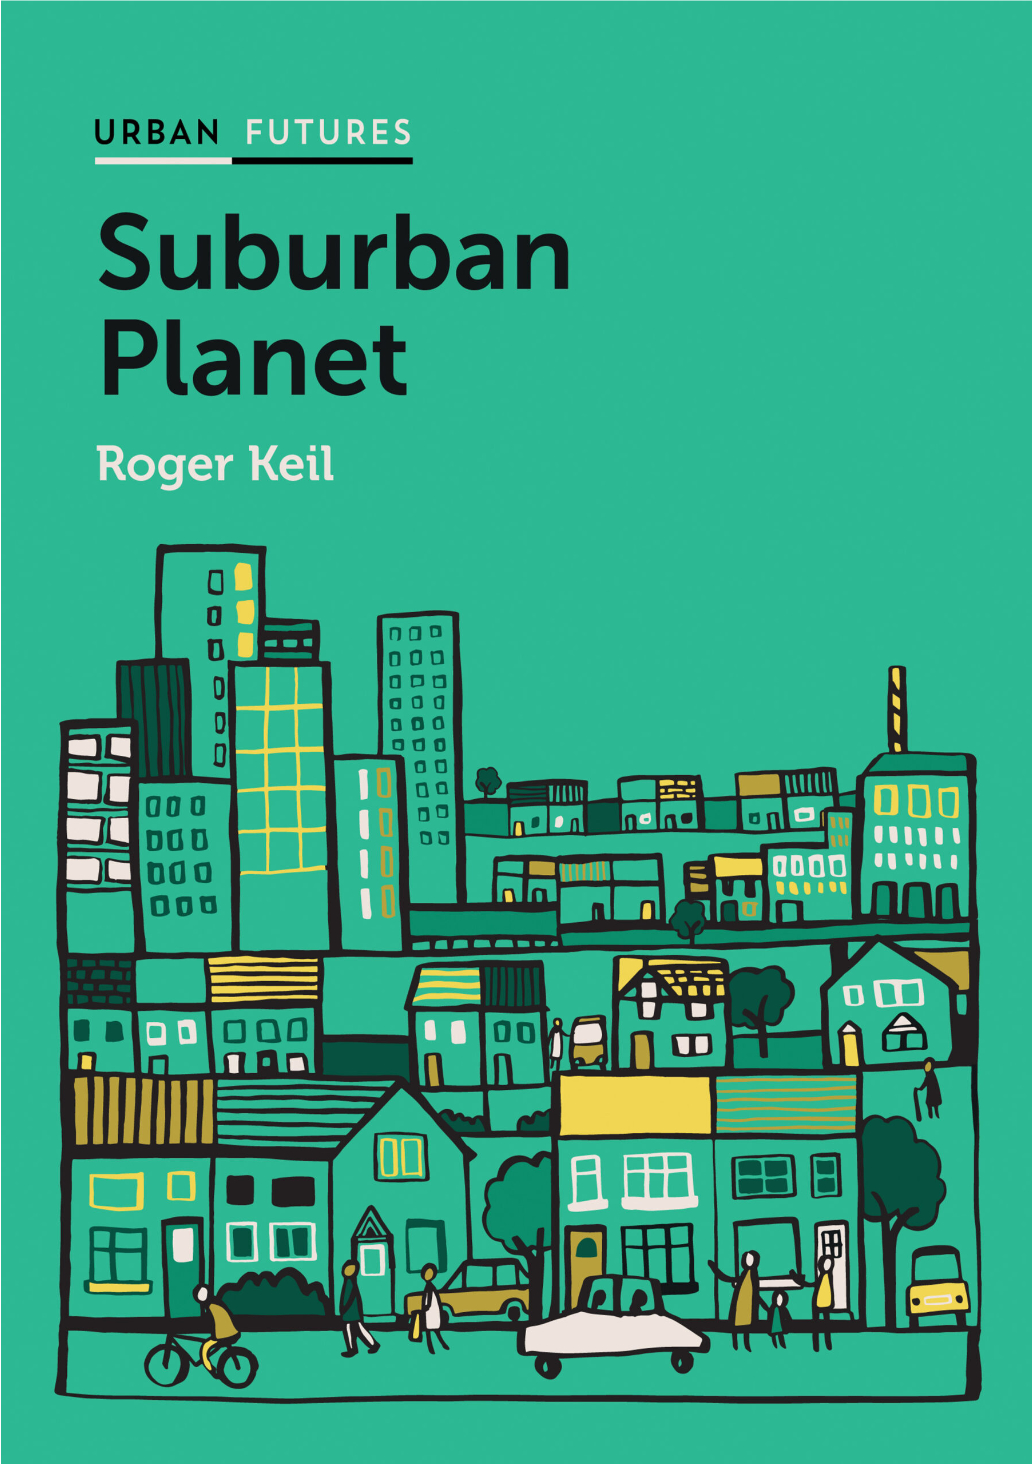 Episode 6 – Reviewing Suburban Planet